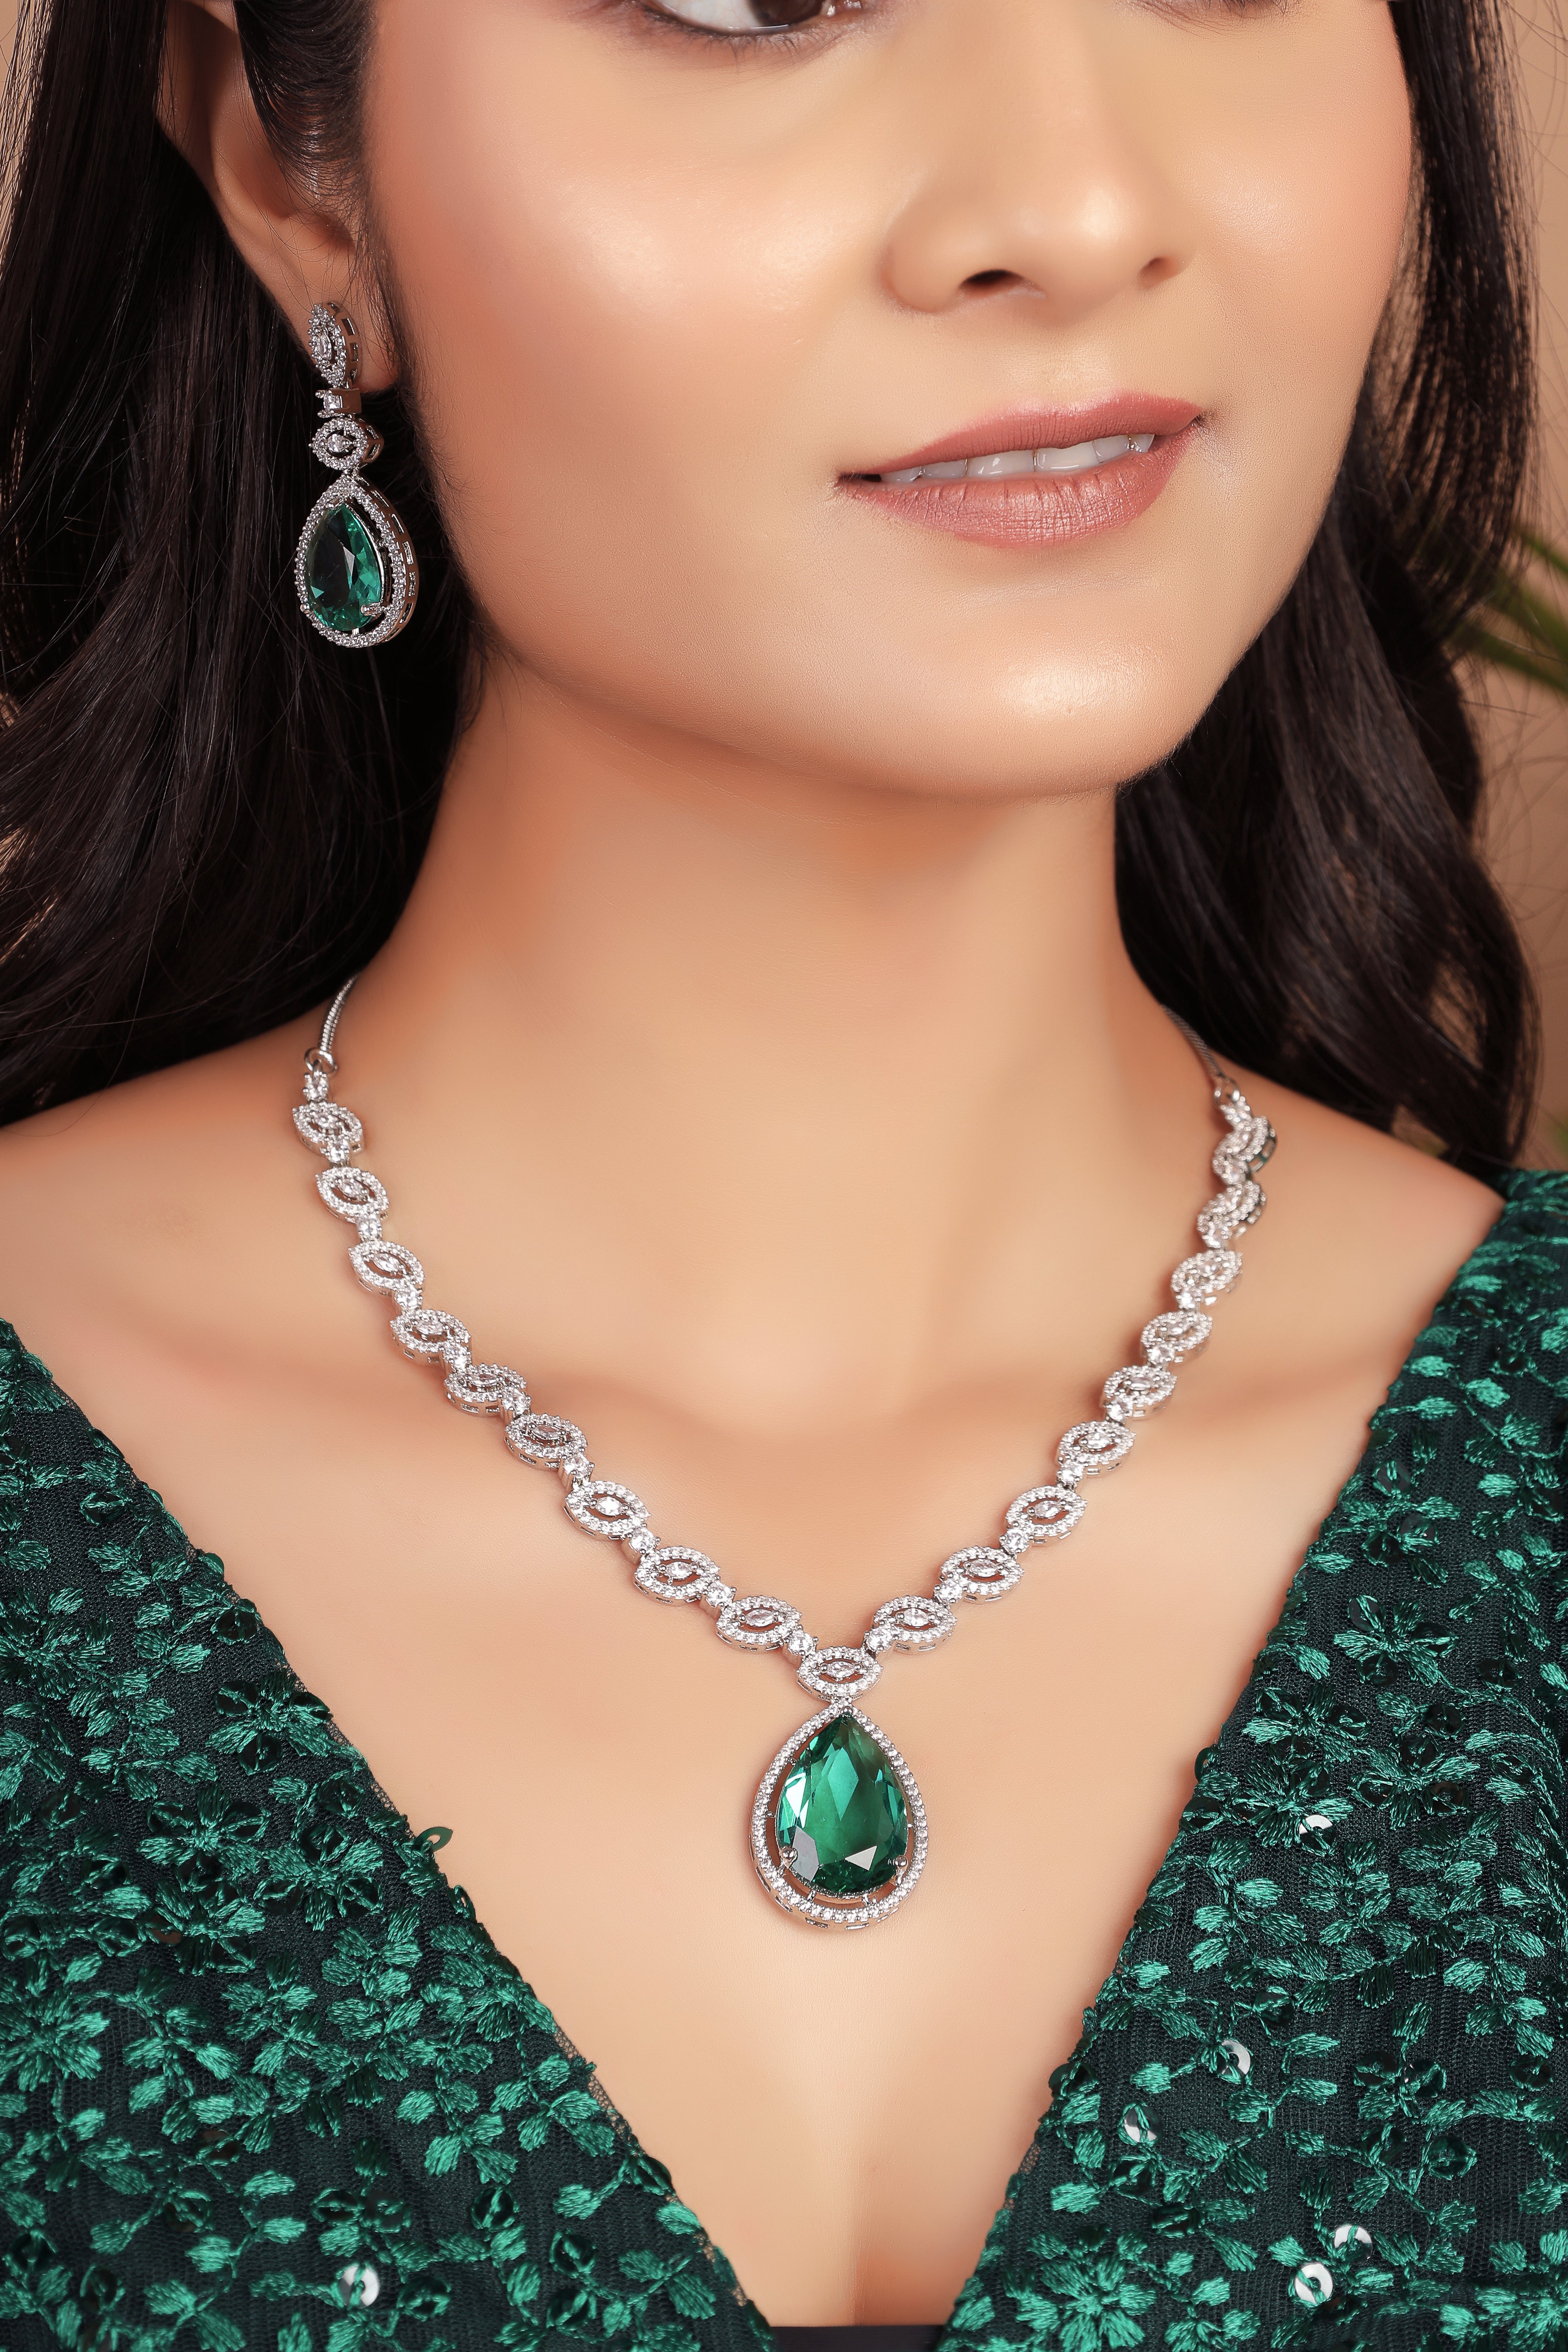 American Diamond Necklace Set for Weddings - Maharani American Diamond  Necklace Set by Blingvine